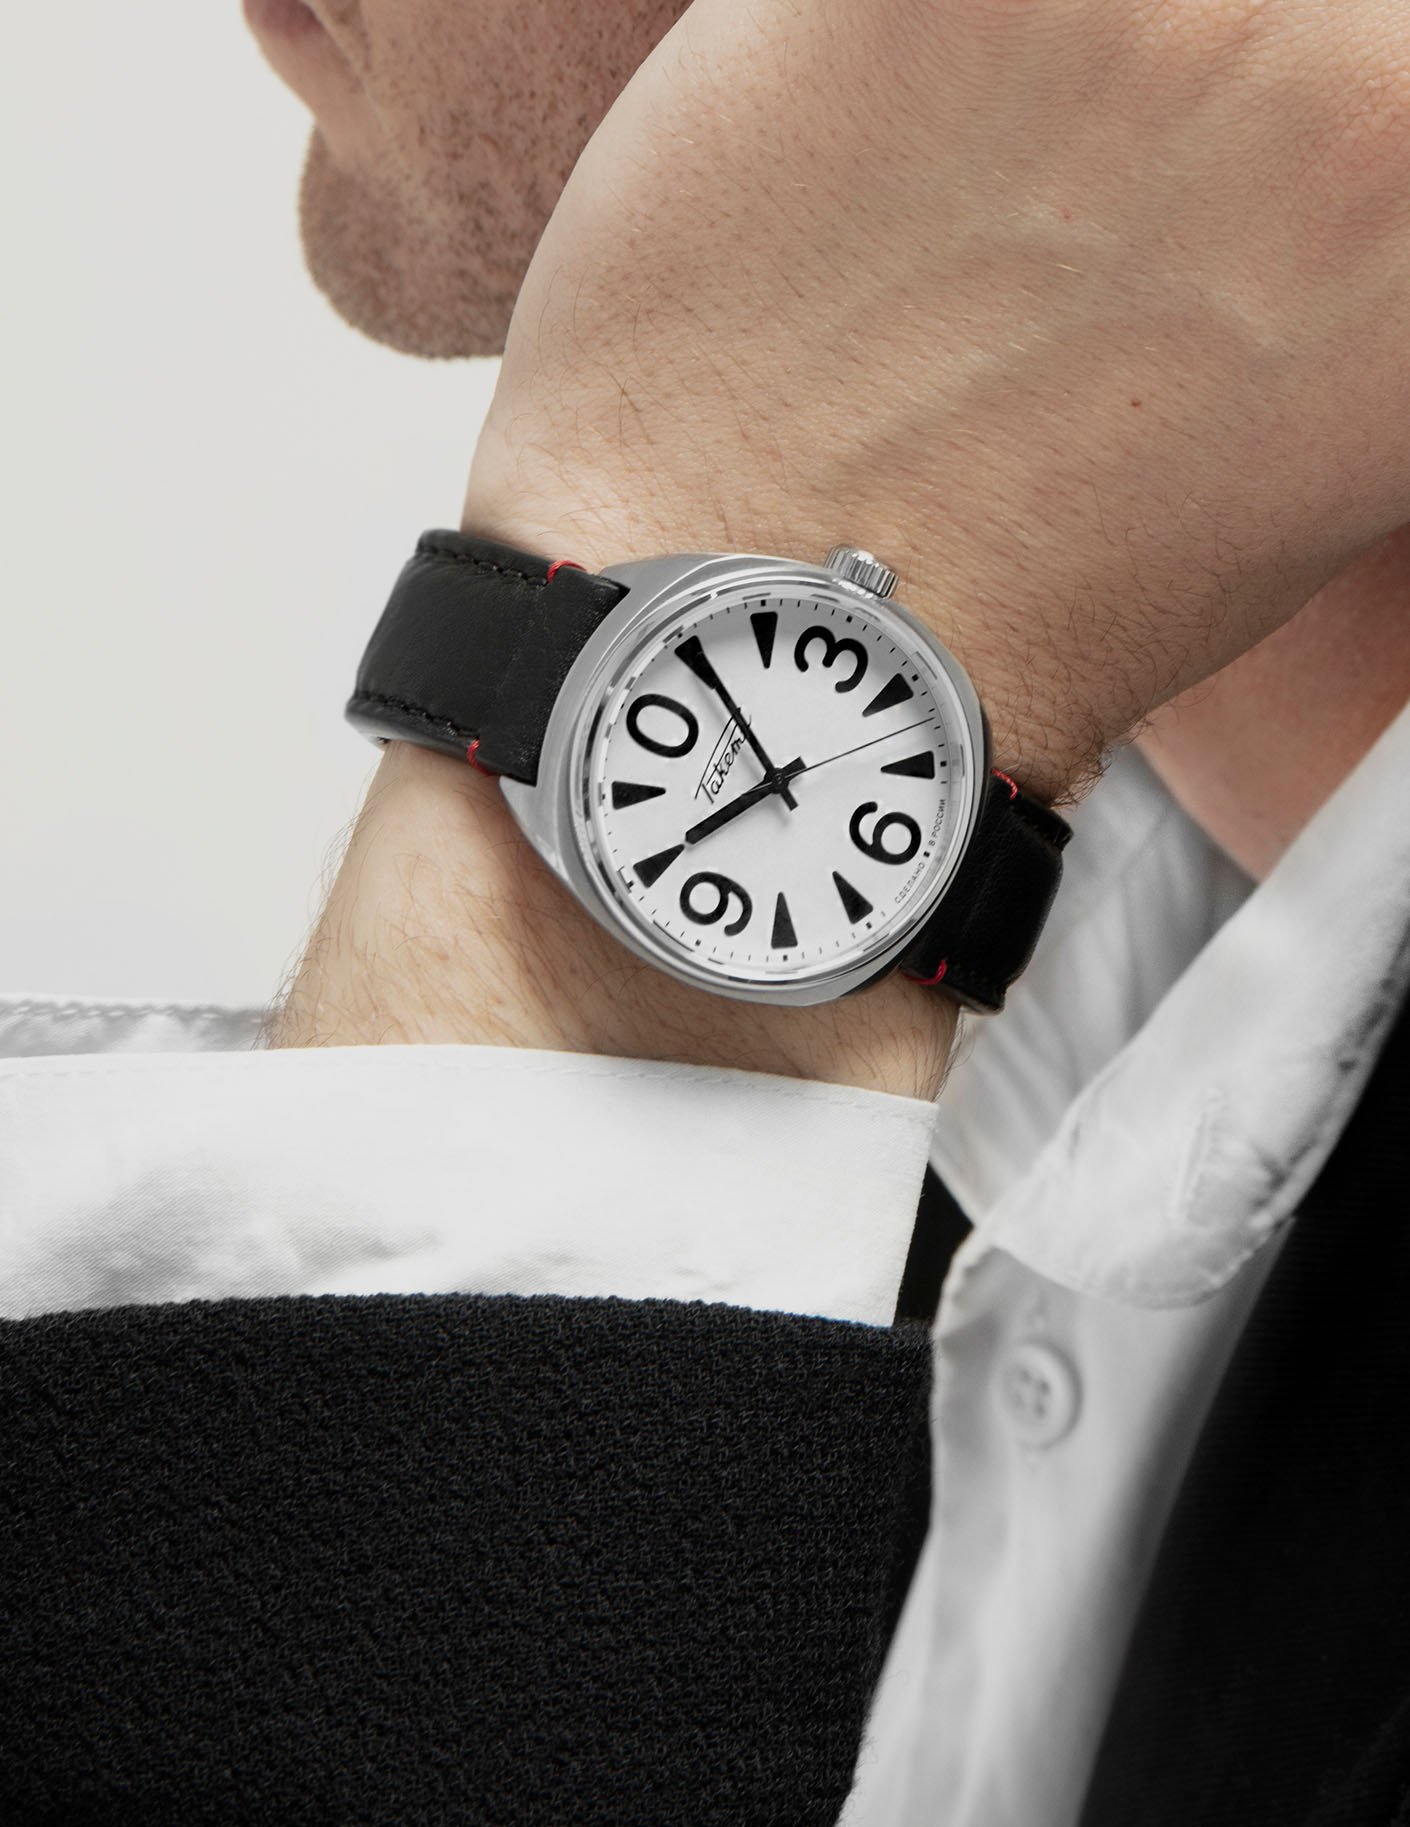 Plus Minus Zero Wrist Watch - Acquire